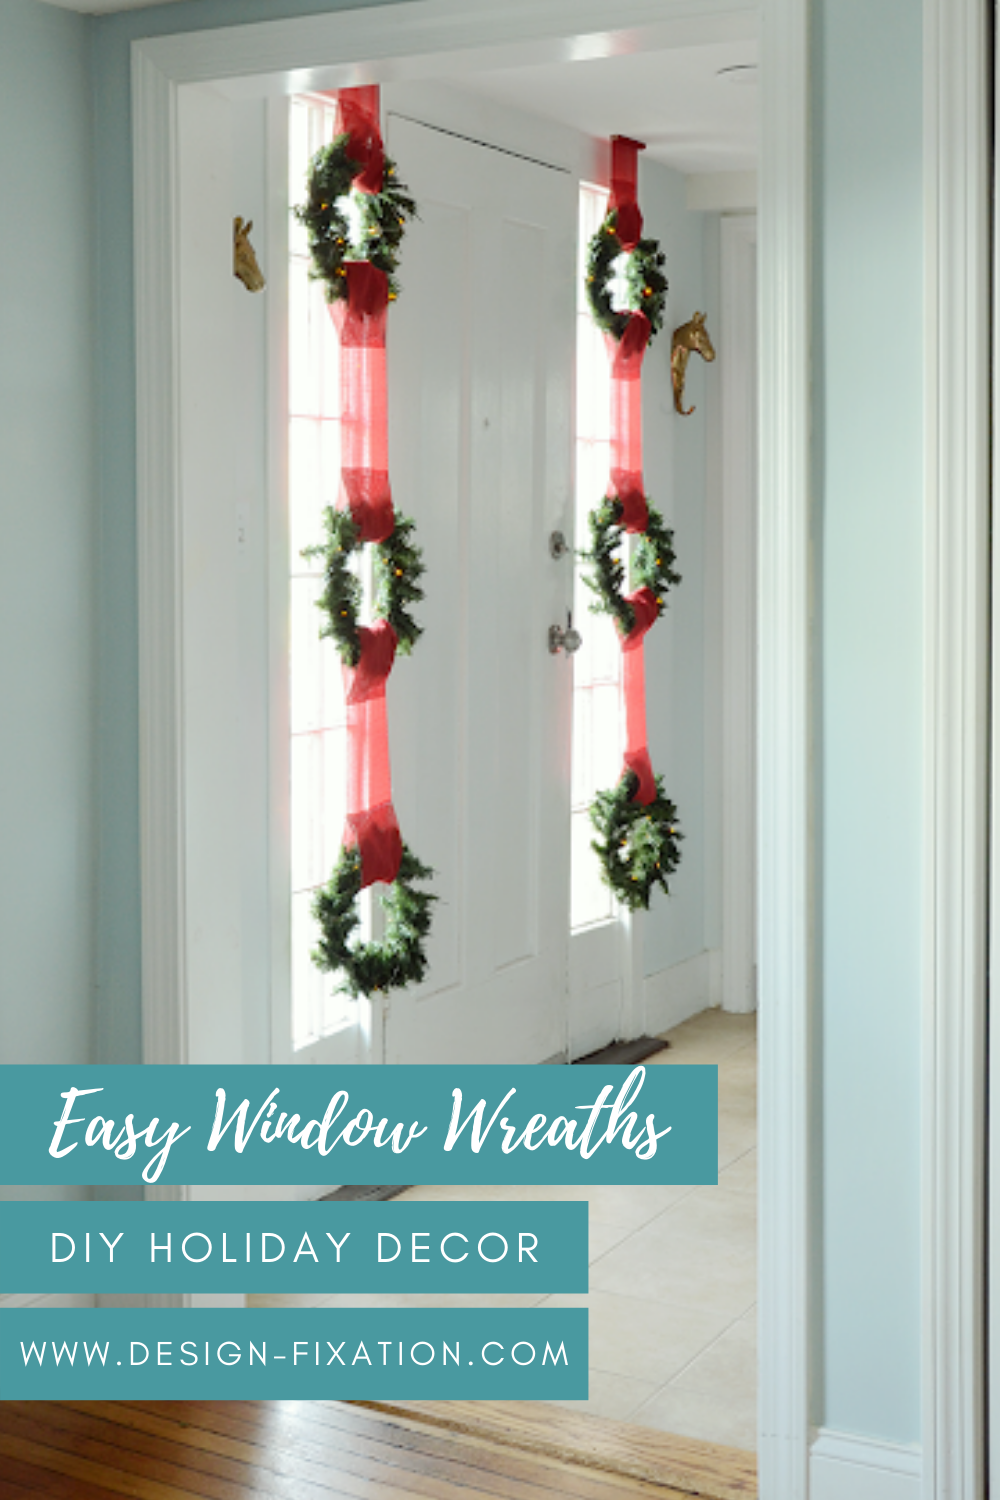 Easy Christmas Wreath Window Display /// By Design Fixation #diy #holidaydiy #christmas #wreath